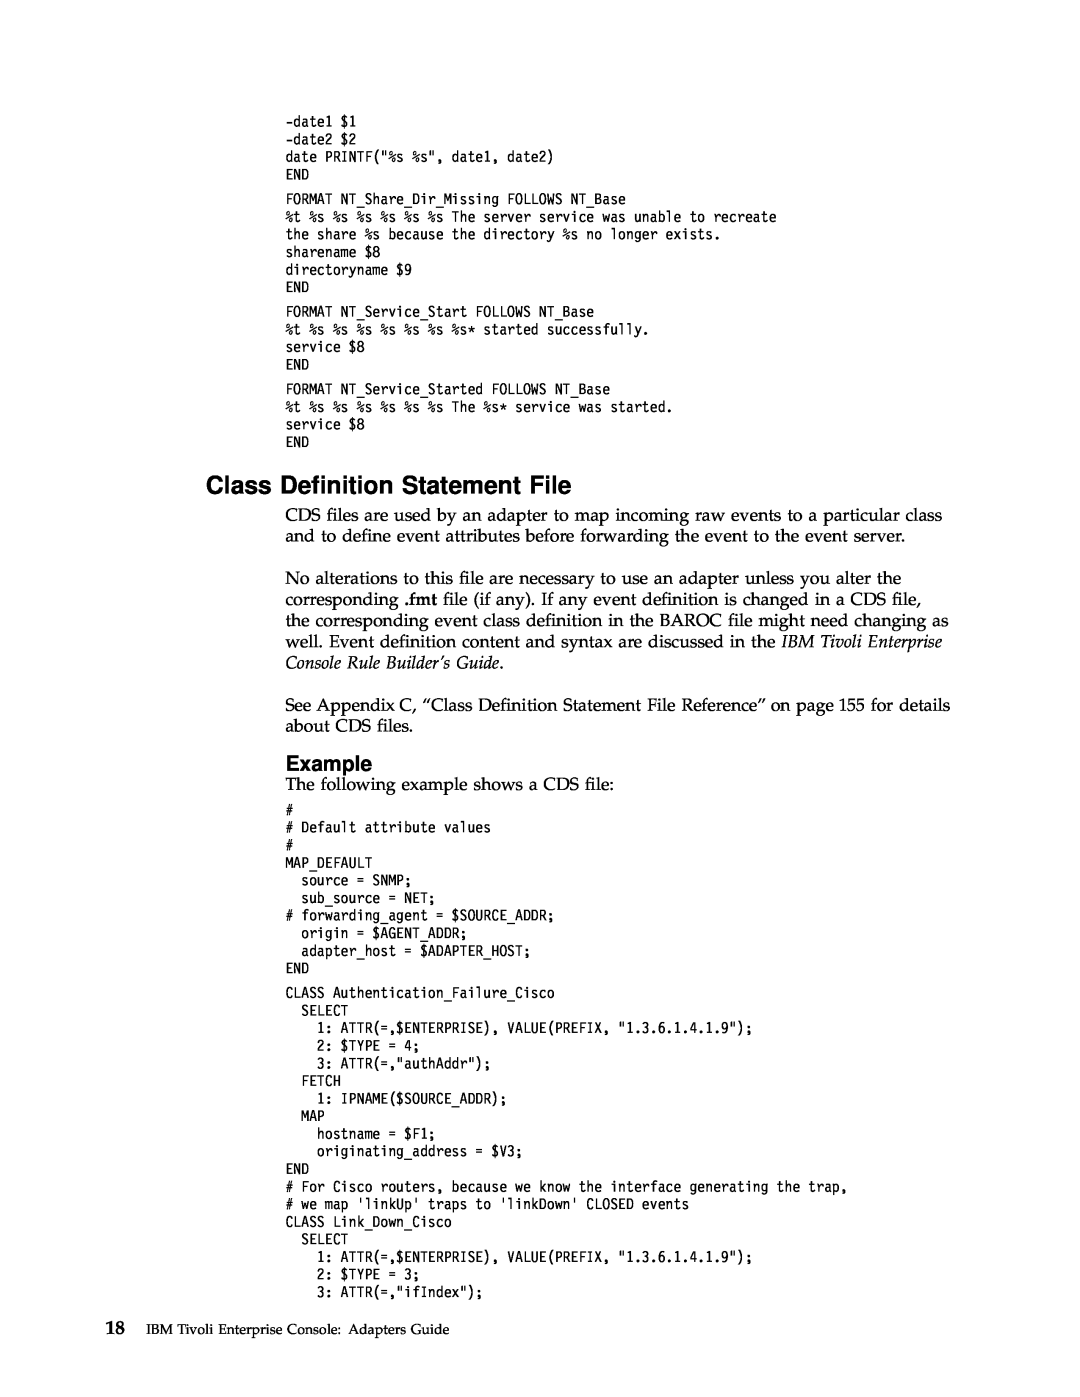 IBM Enterprise Console manual Class Definition Statement File, Example 